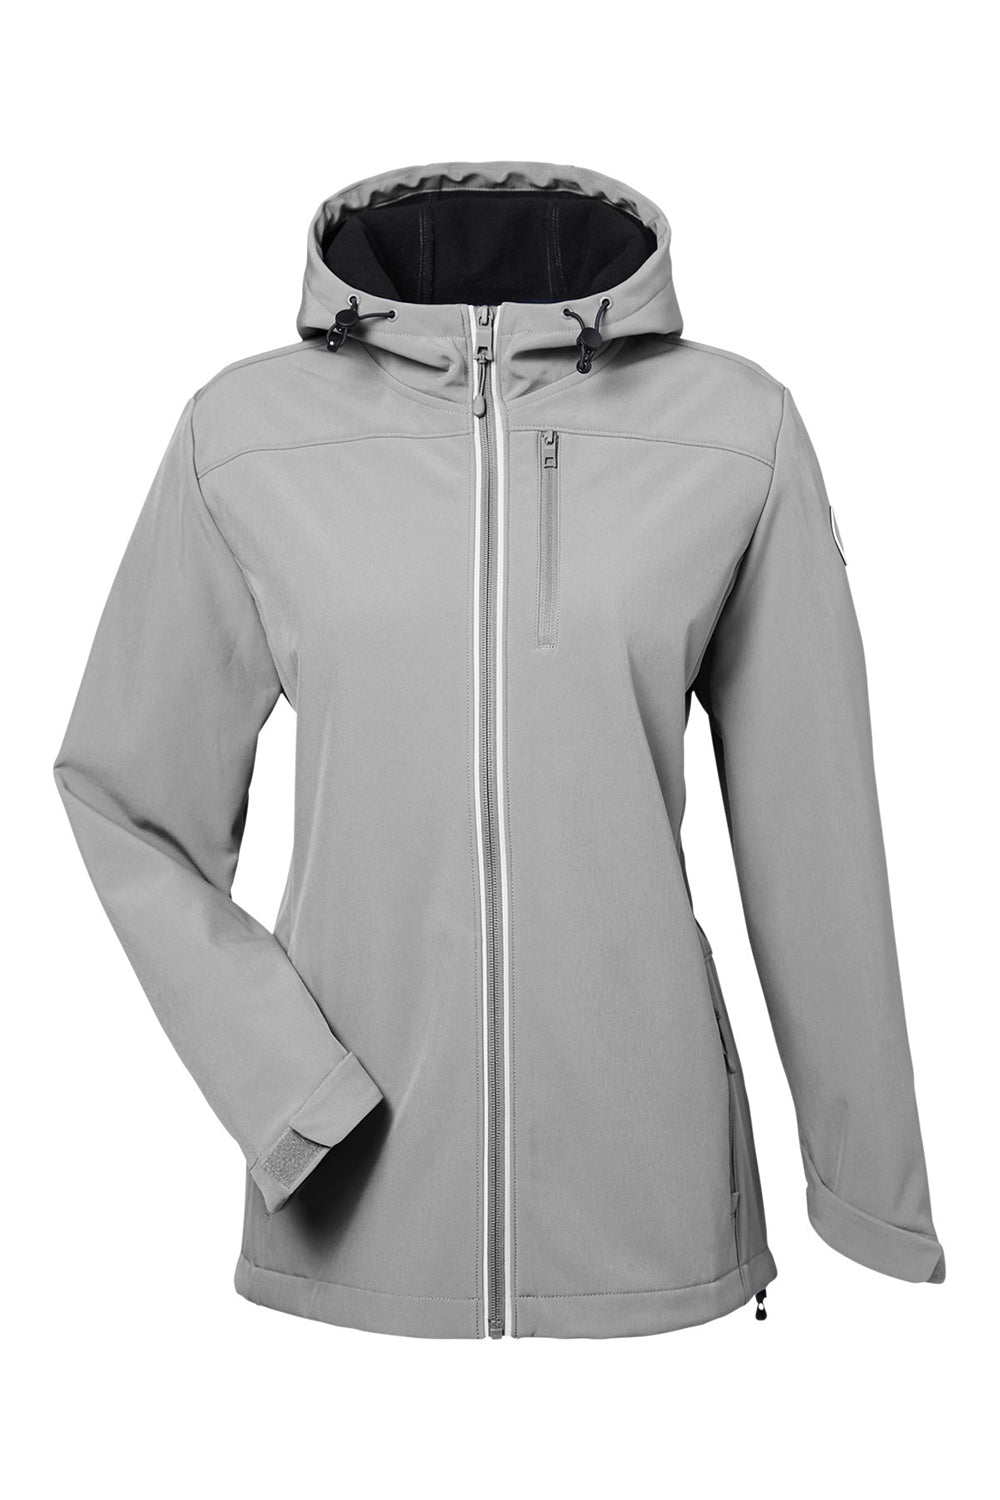 Nautica N17790 Womens Wavestorm Full Zip Hooded Jacket Graphite Grey Flat Front